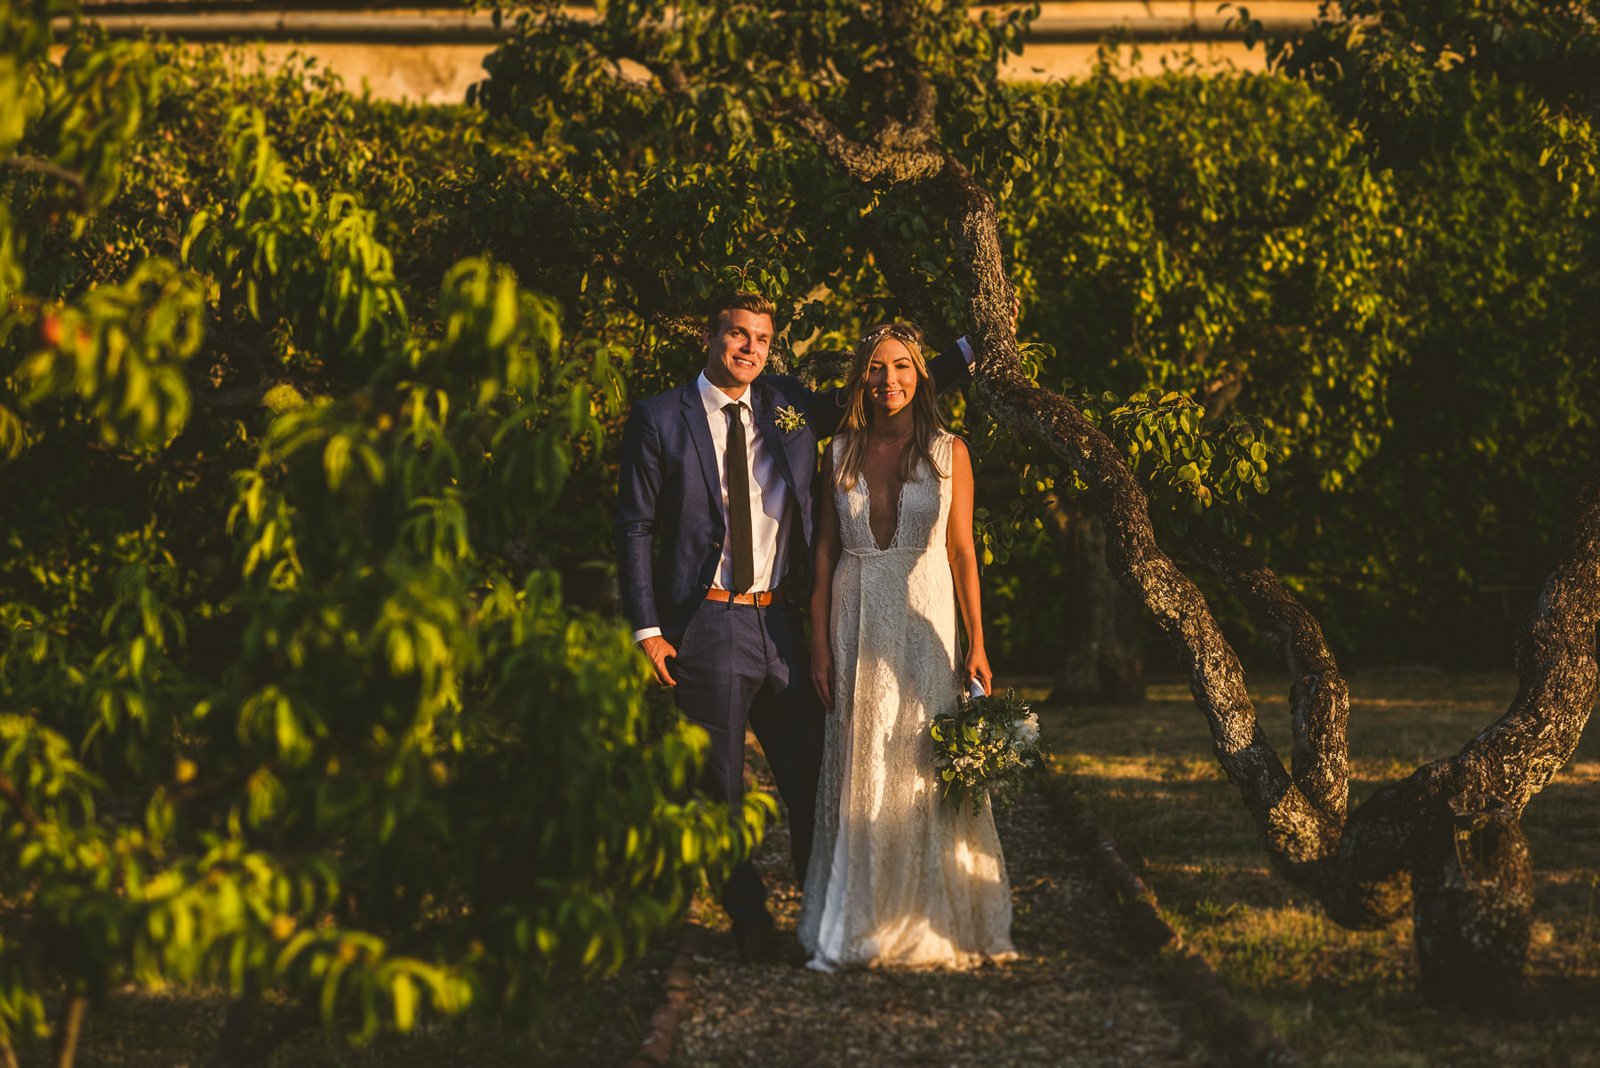 A+L Wedding at Montechiaro, Siena by Federico Pannacci 88